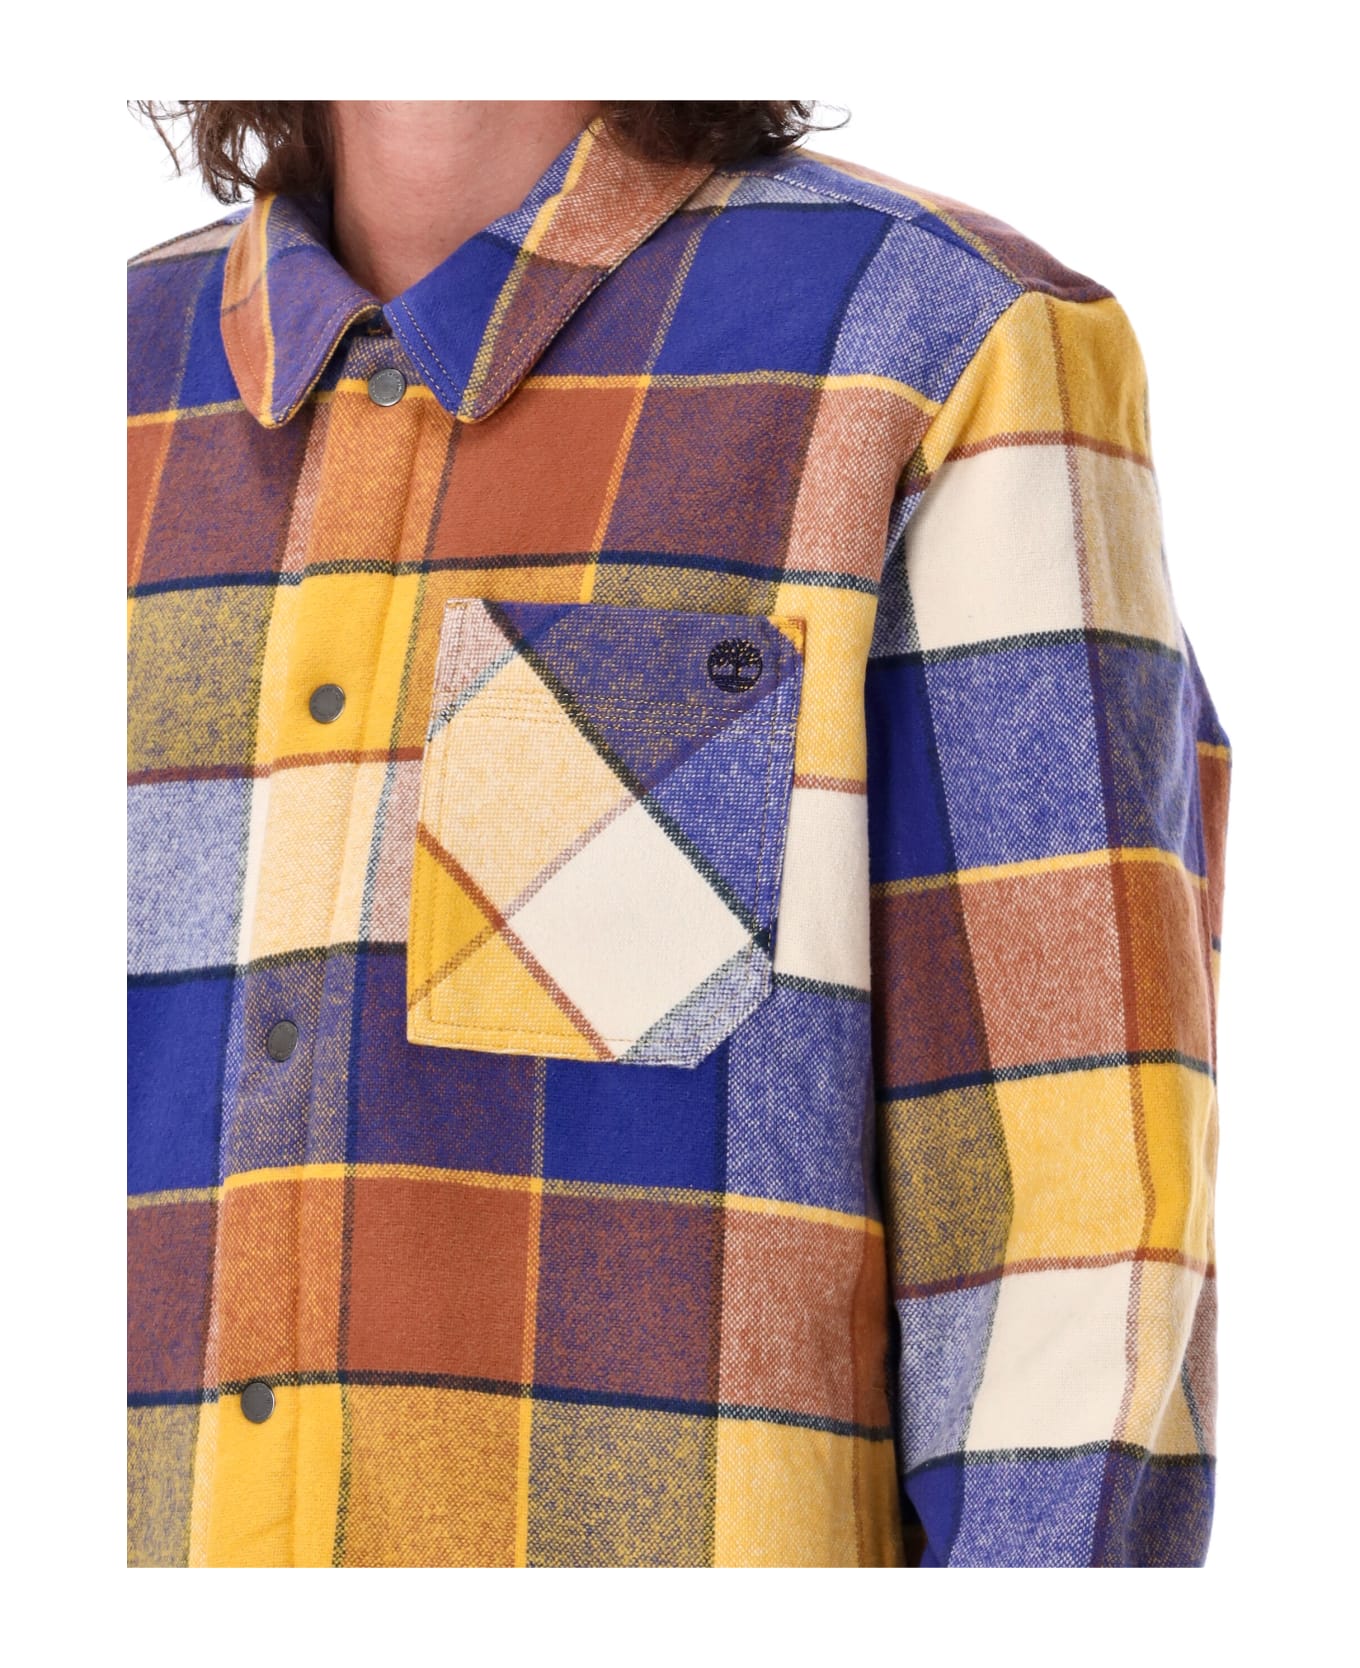 Timberland Check Shirt Jacket - ECRU CHECK ブレザー